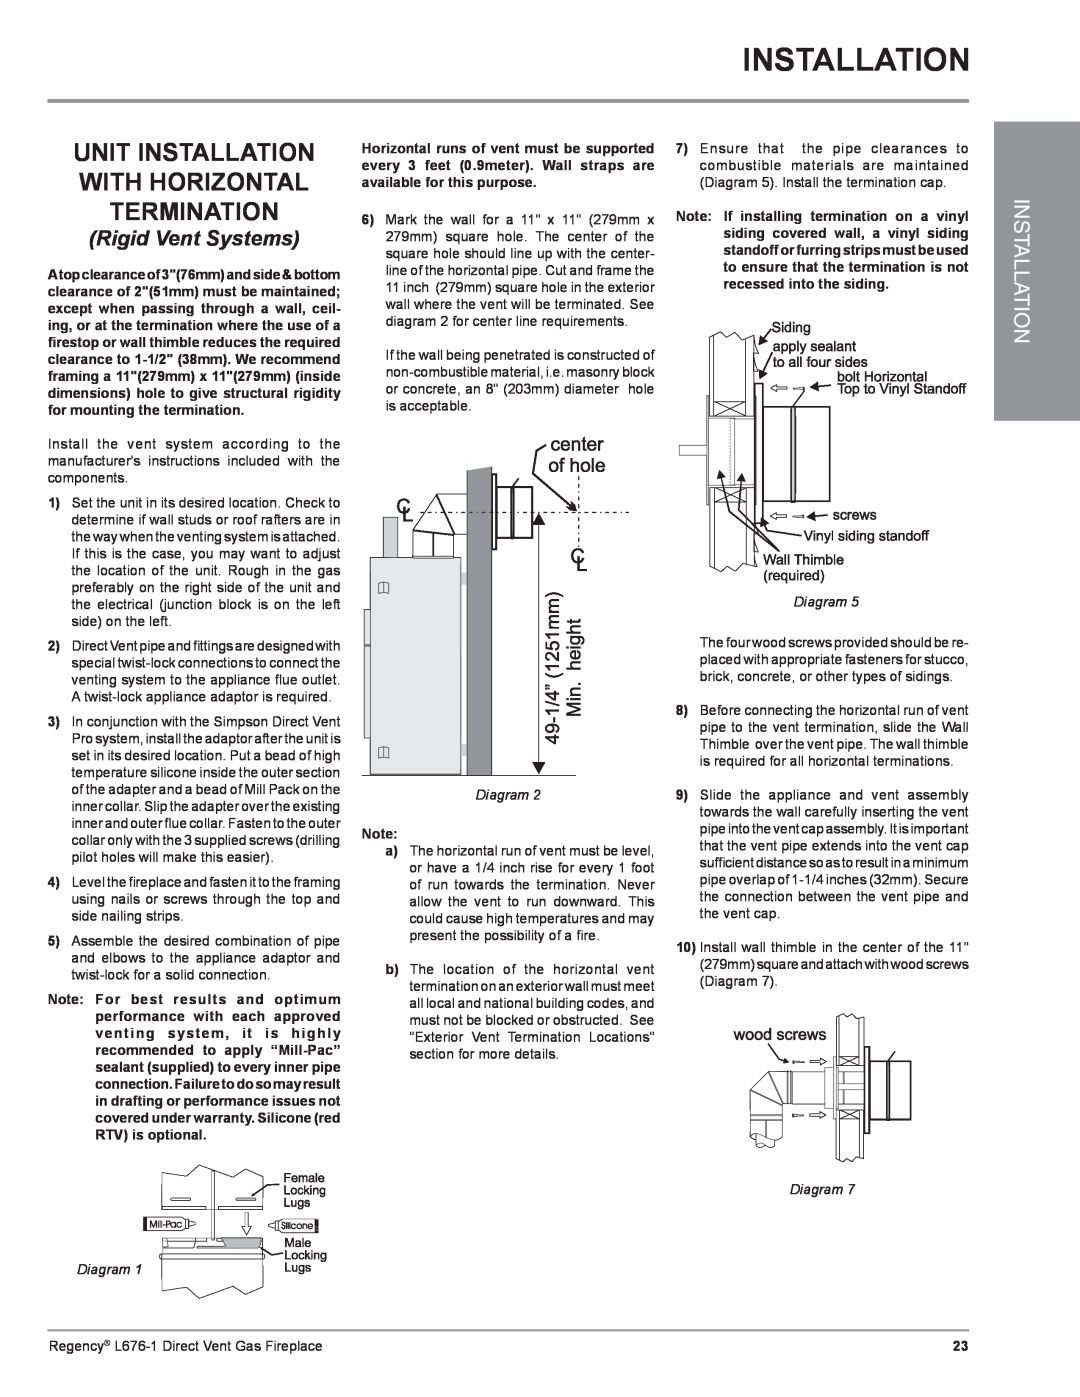 Regency L676-LP1, L676-NG1 Unit Installation With Horizontal Termination, Rigid Vent Systems, Diagram Diagram 